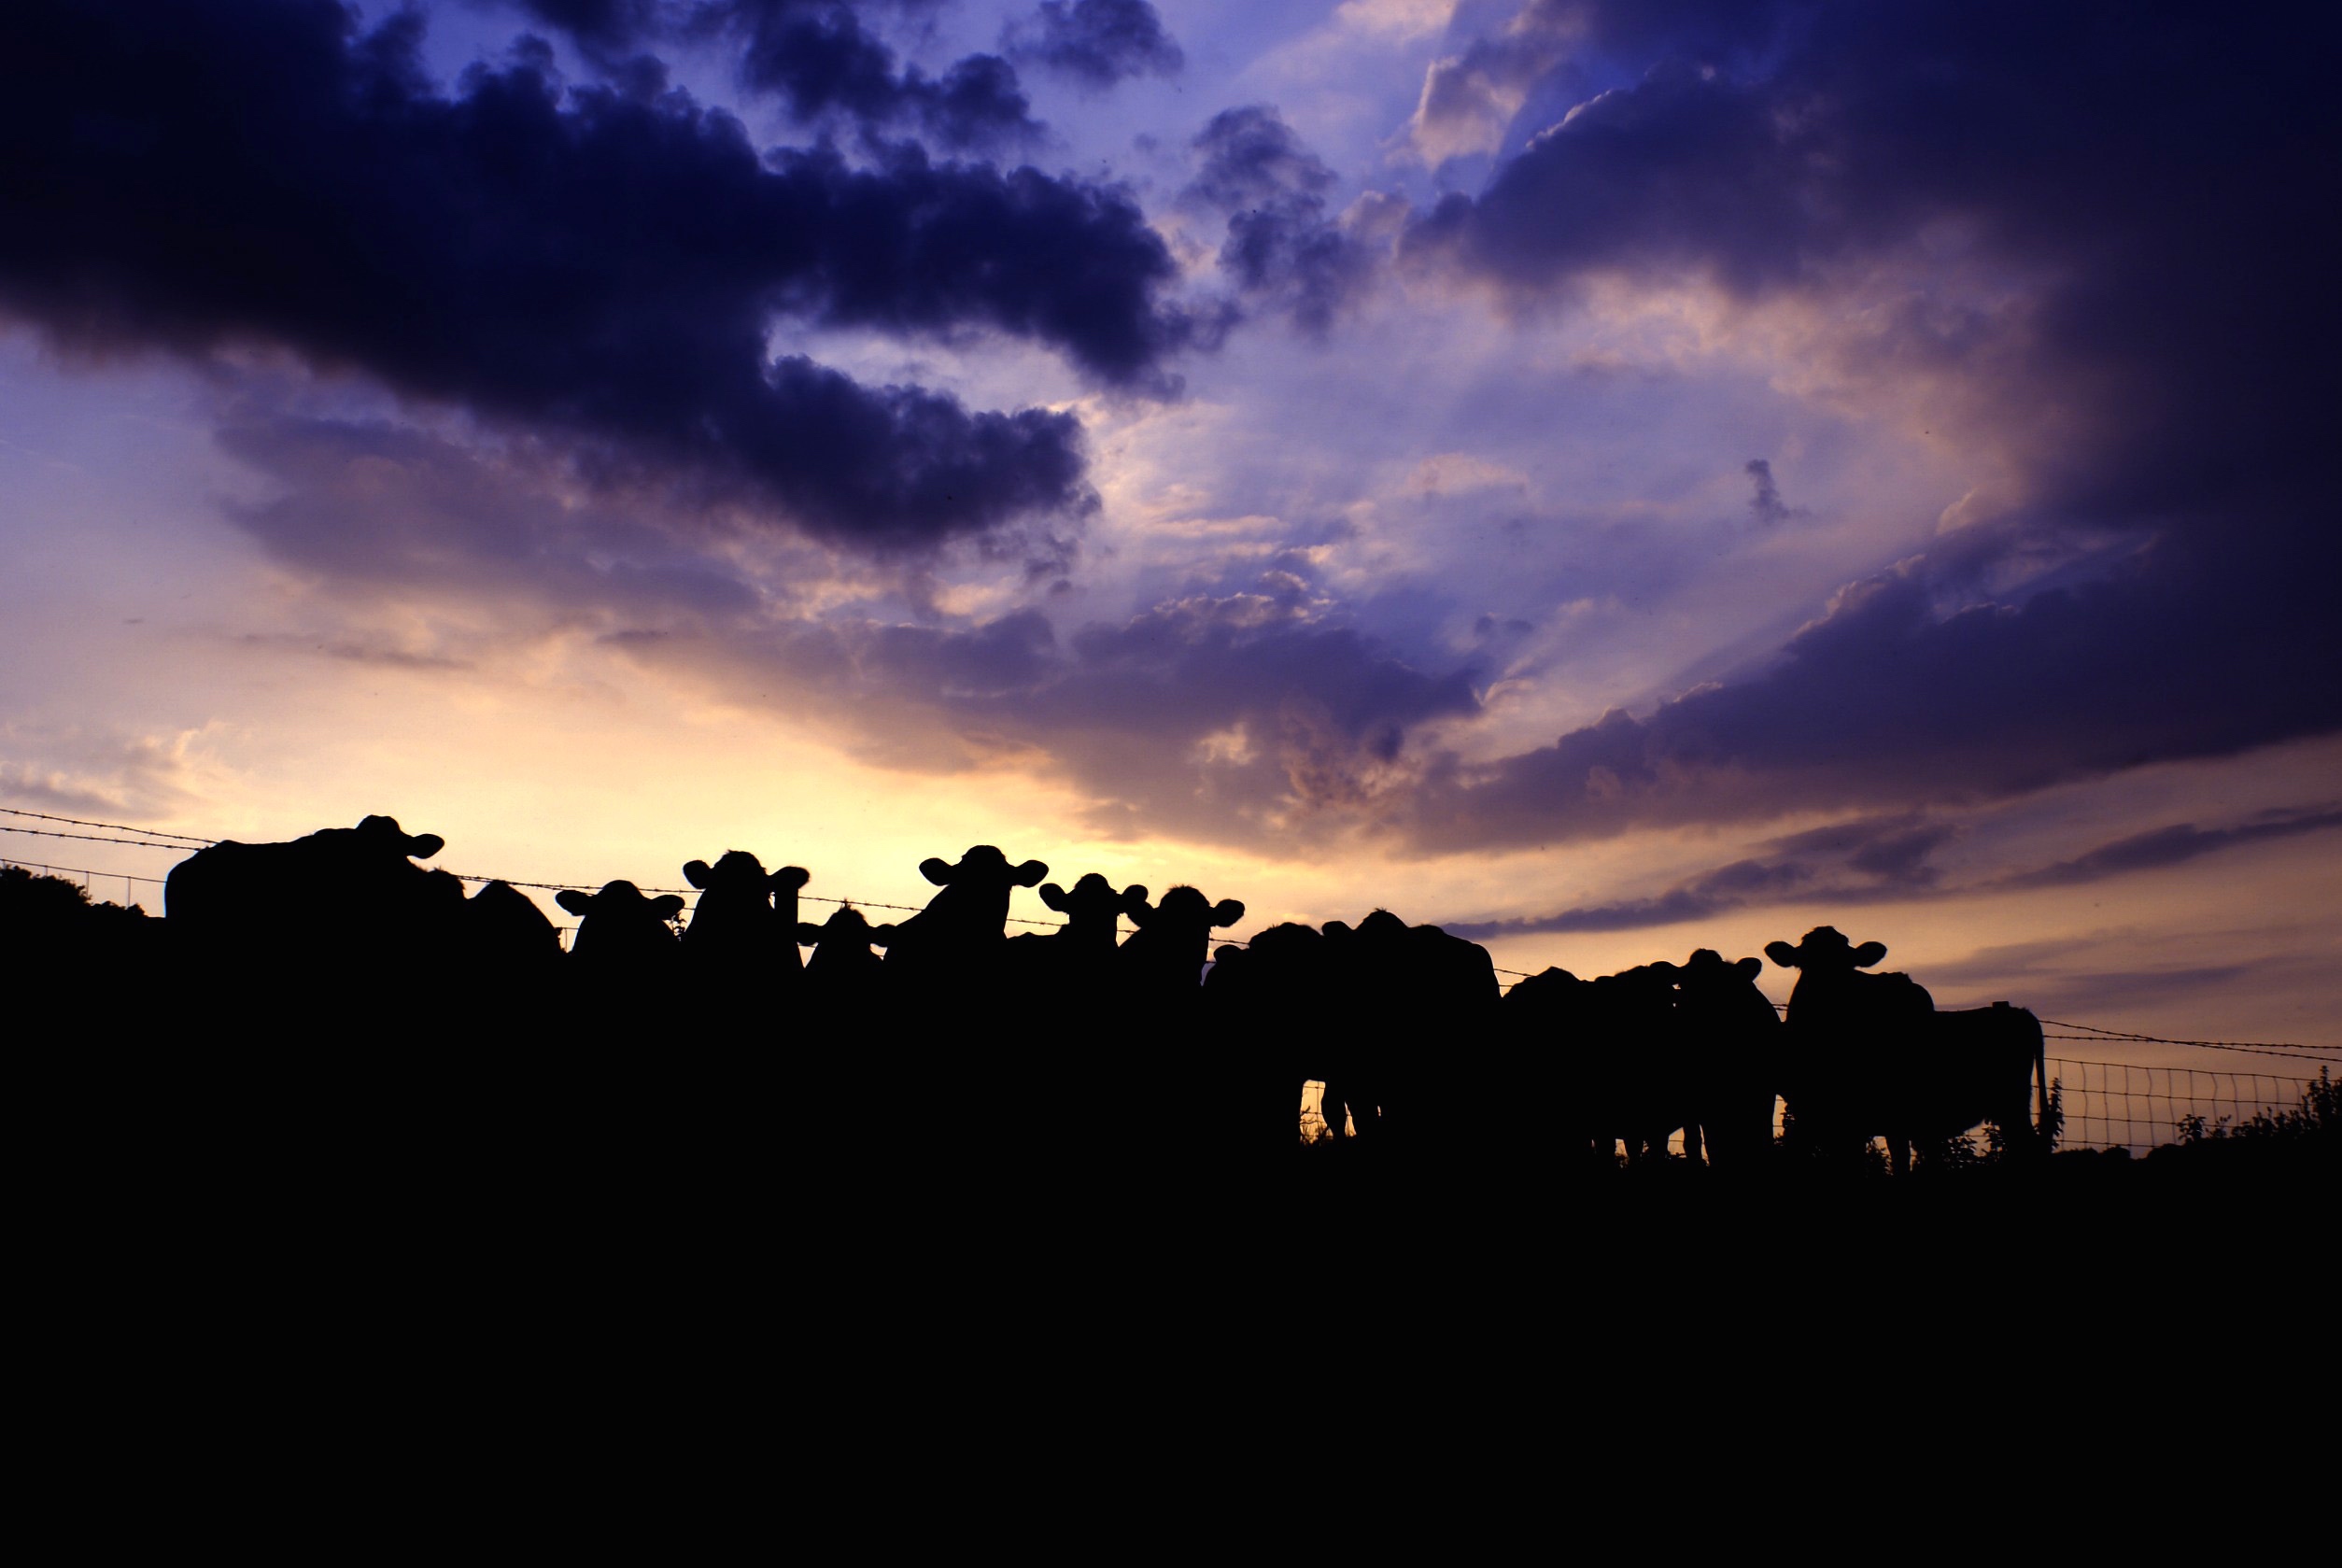 https://philipstanfielddotcom.files.wordpress.com/2015/08/cows-at-sunset.jpg